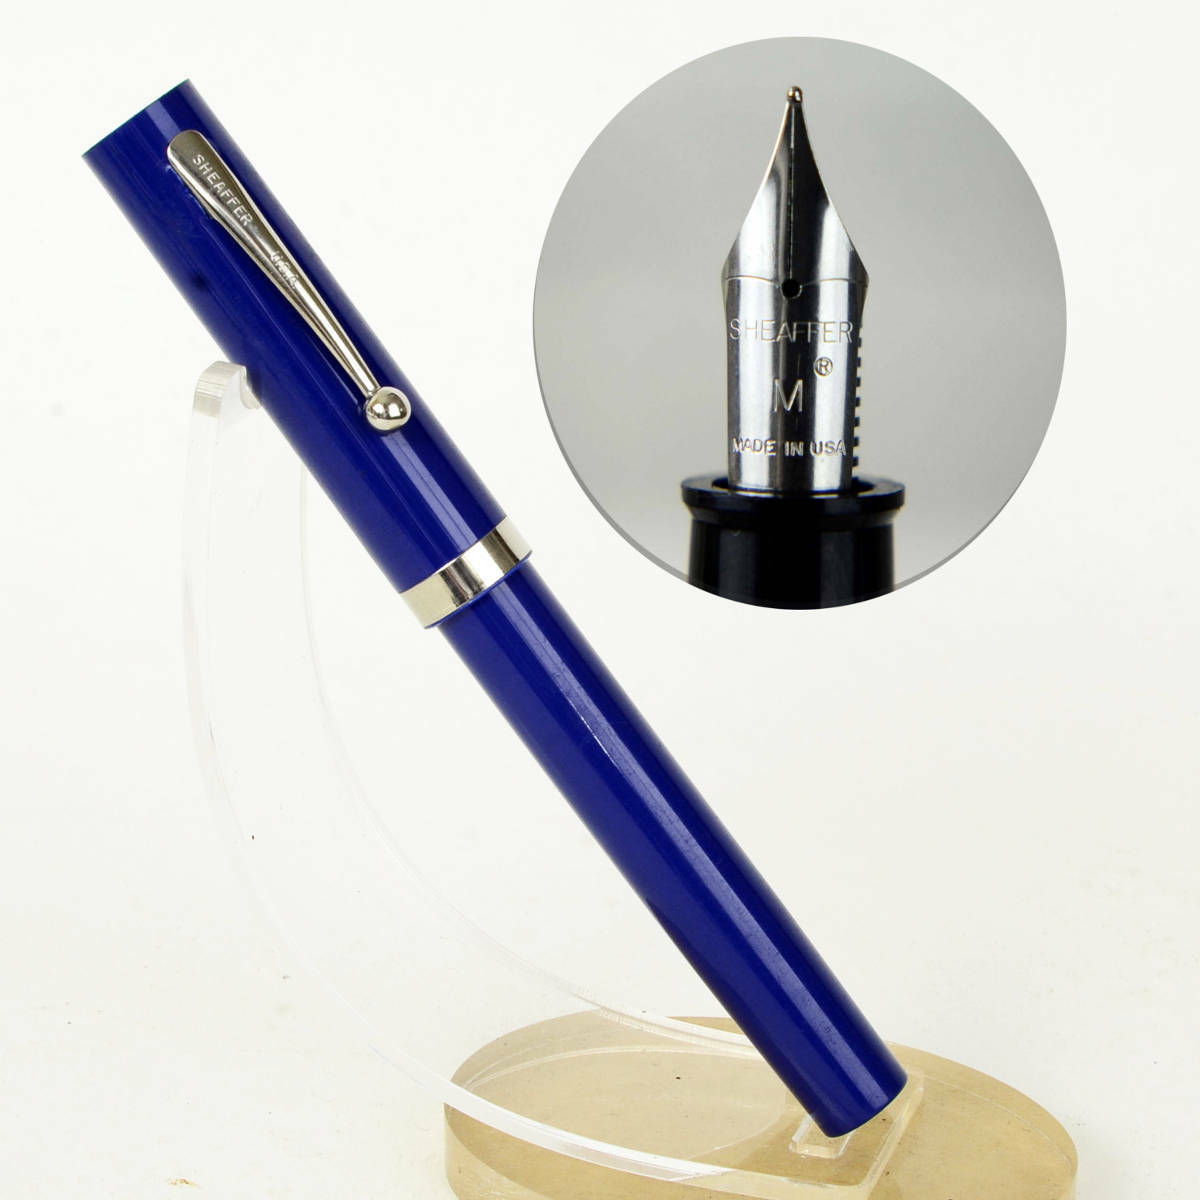 Vintage sheaffer no nonsense opaque blue barrel fountain pen - 1970  - M nib